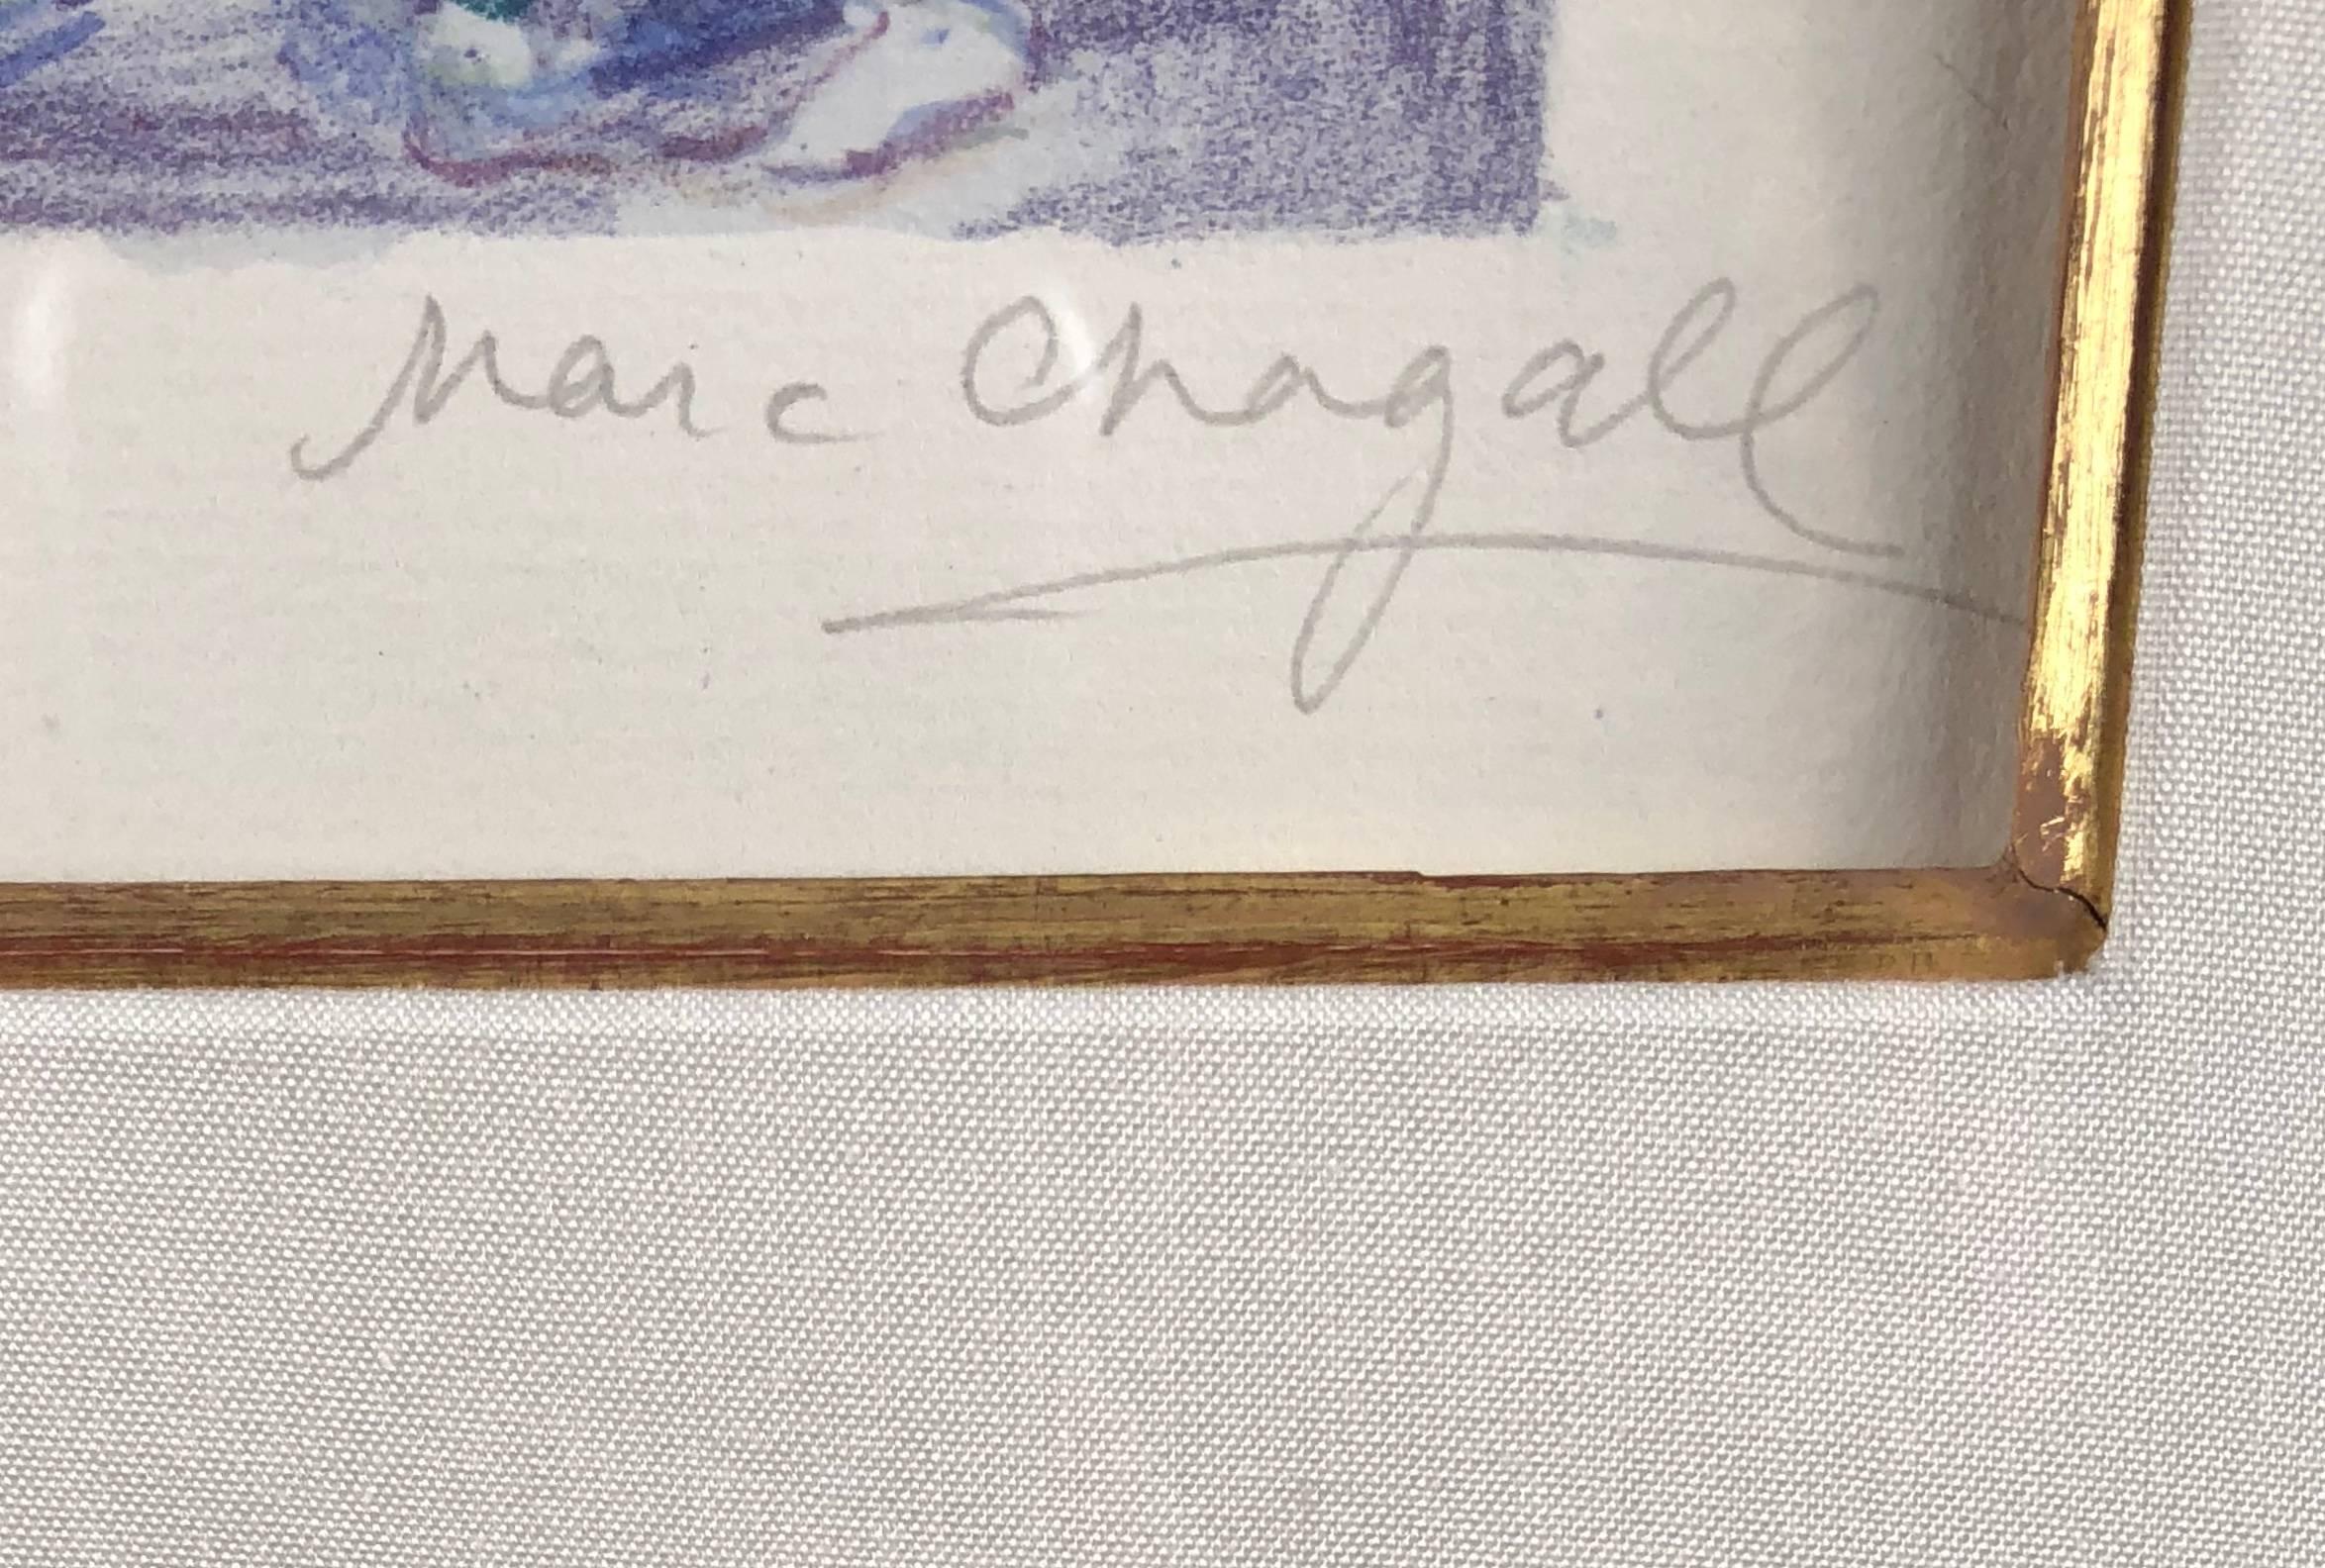 marc chagall arabian nights